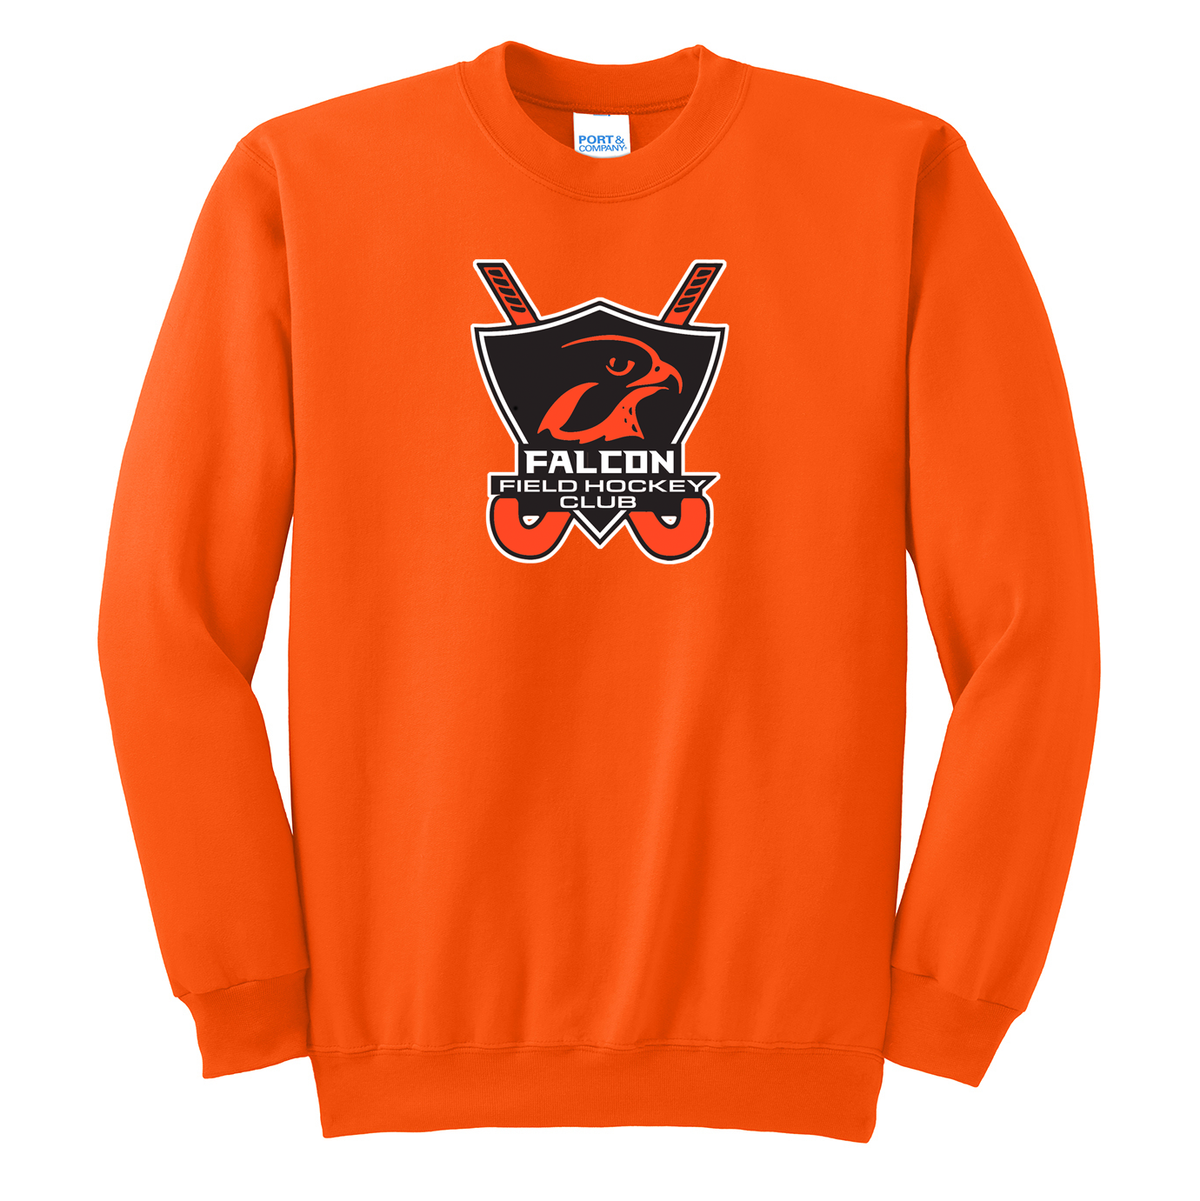 Falcons Field Hockey Club Crew Neck Sweater